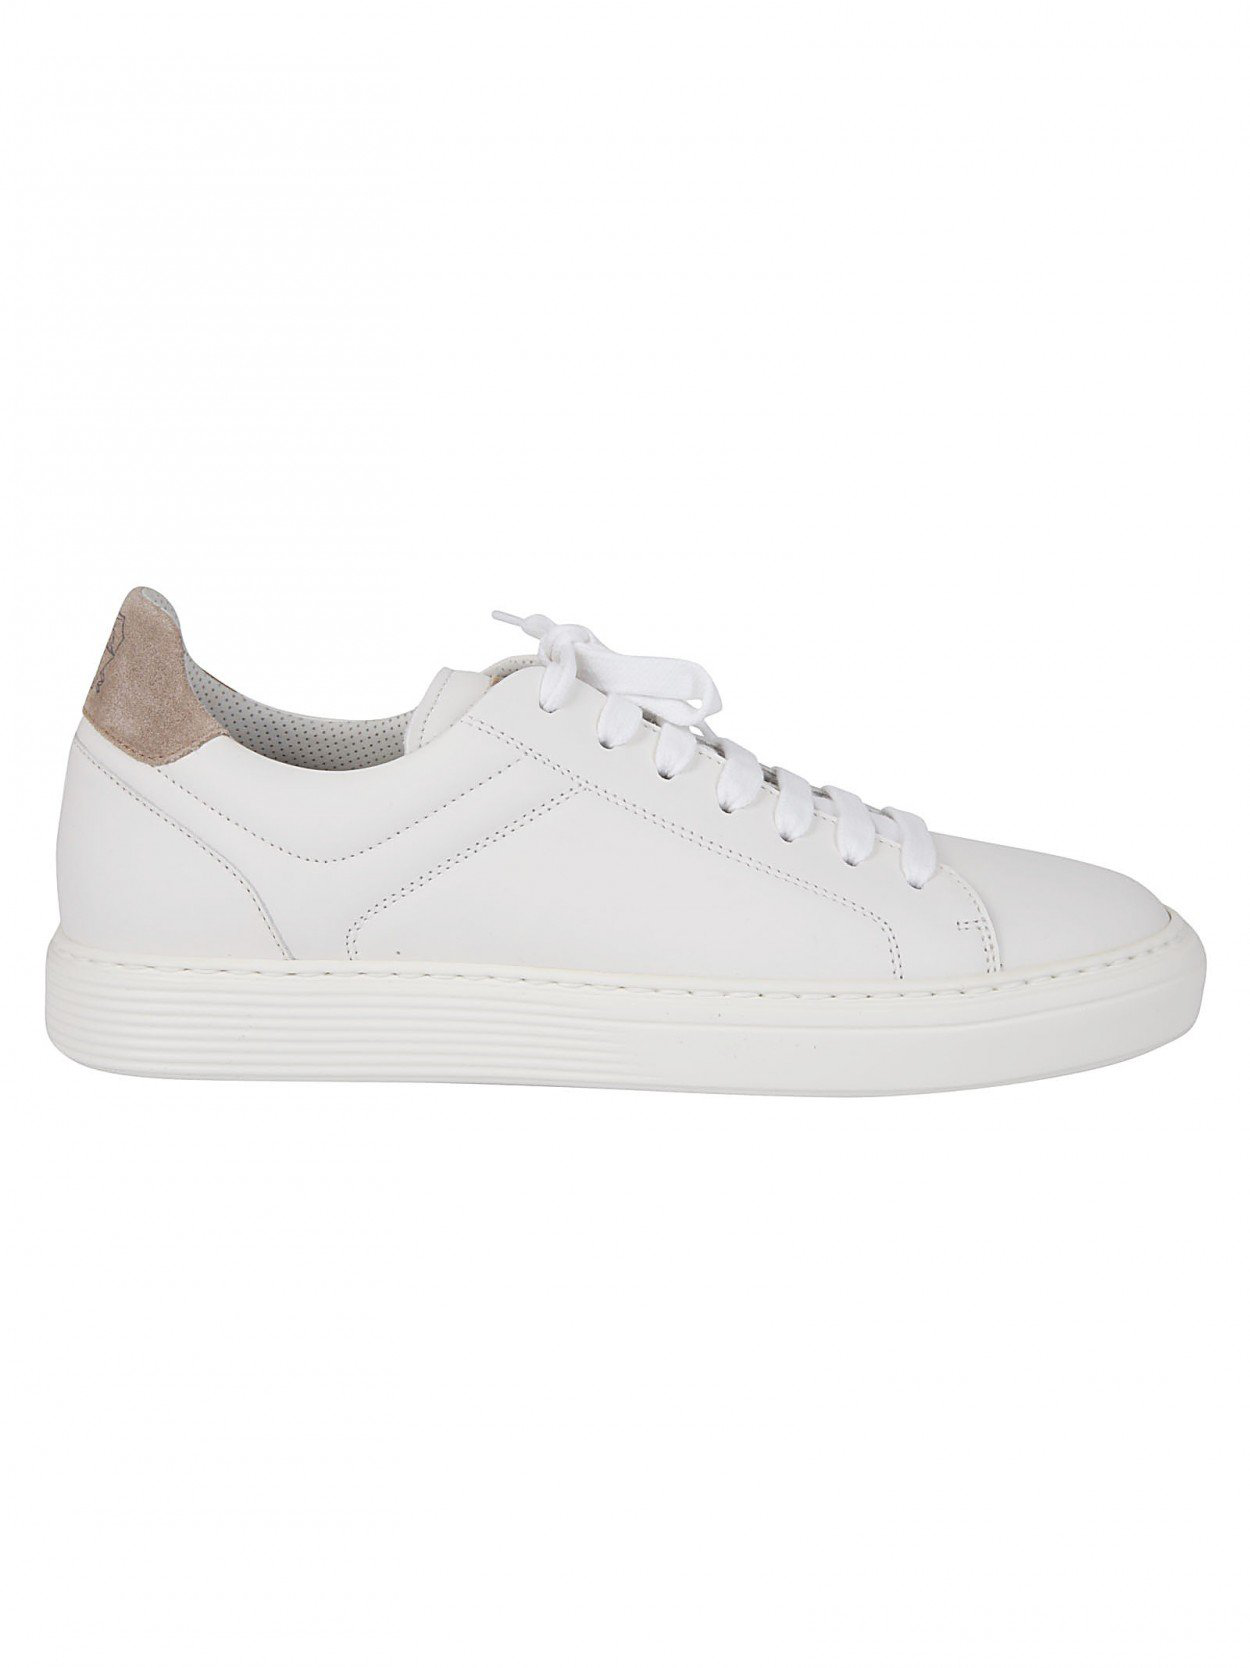 Brunello Cucinelli Low Top Sneakers In White | ModeSens